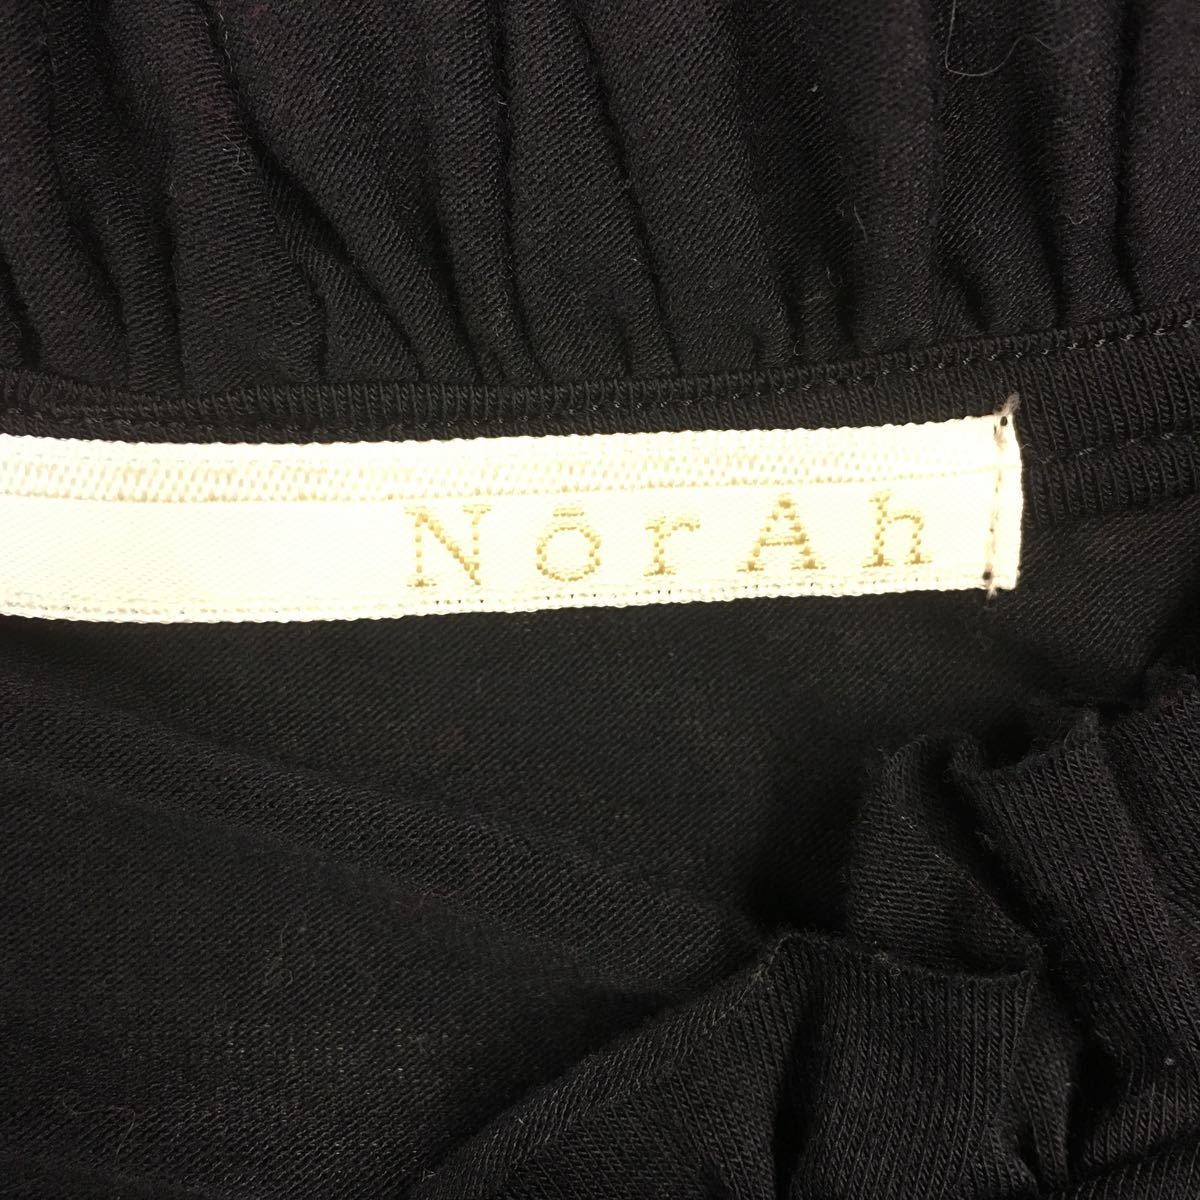 NorAh tunic black size 38